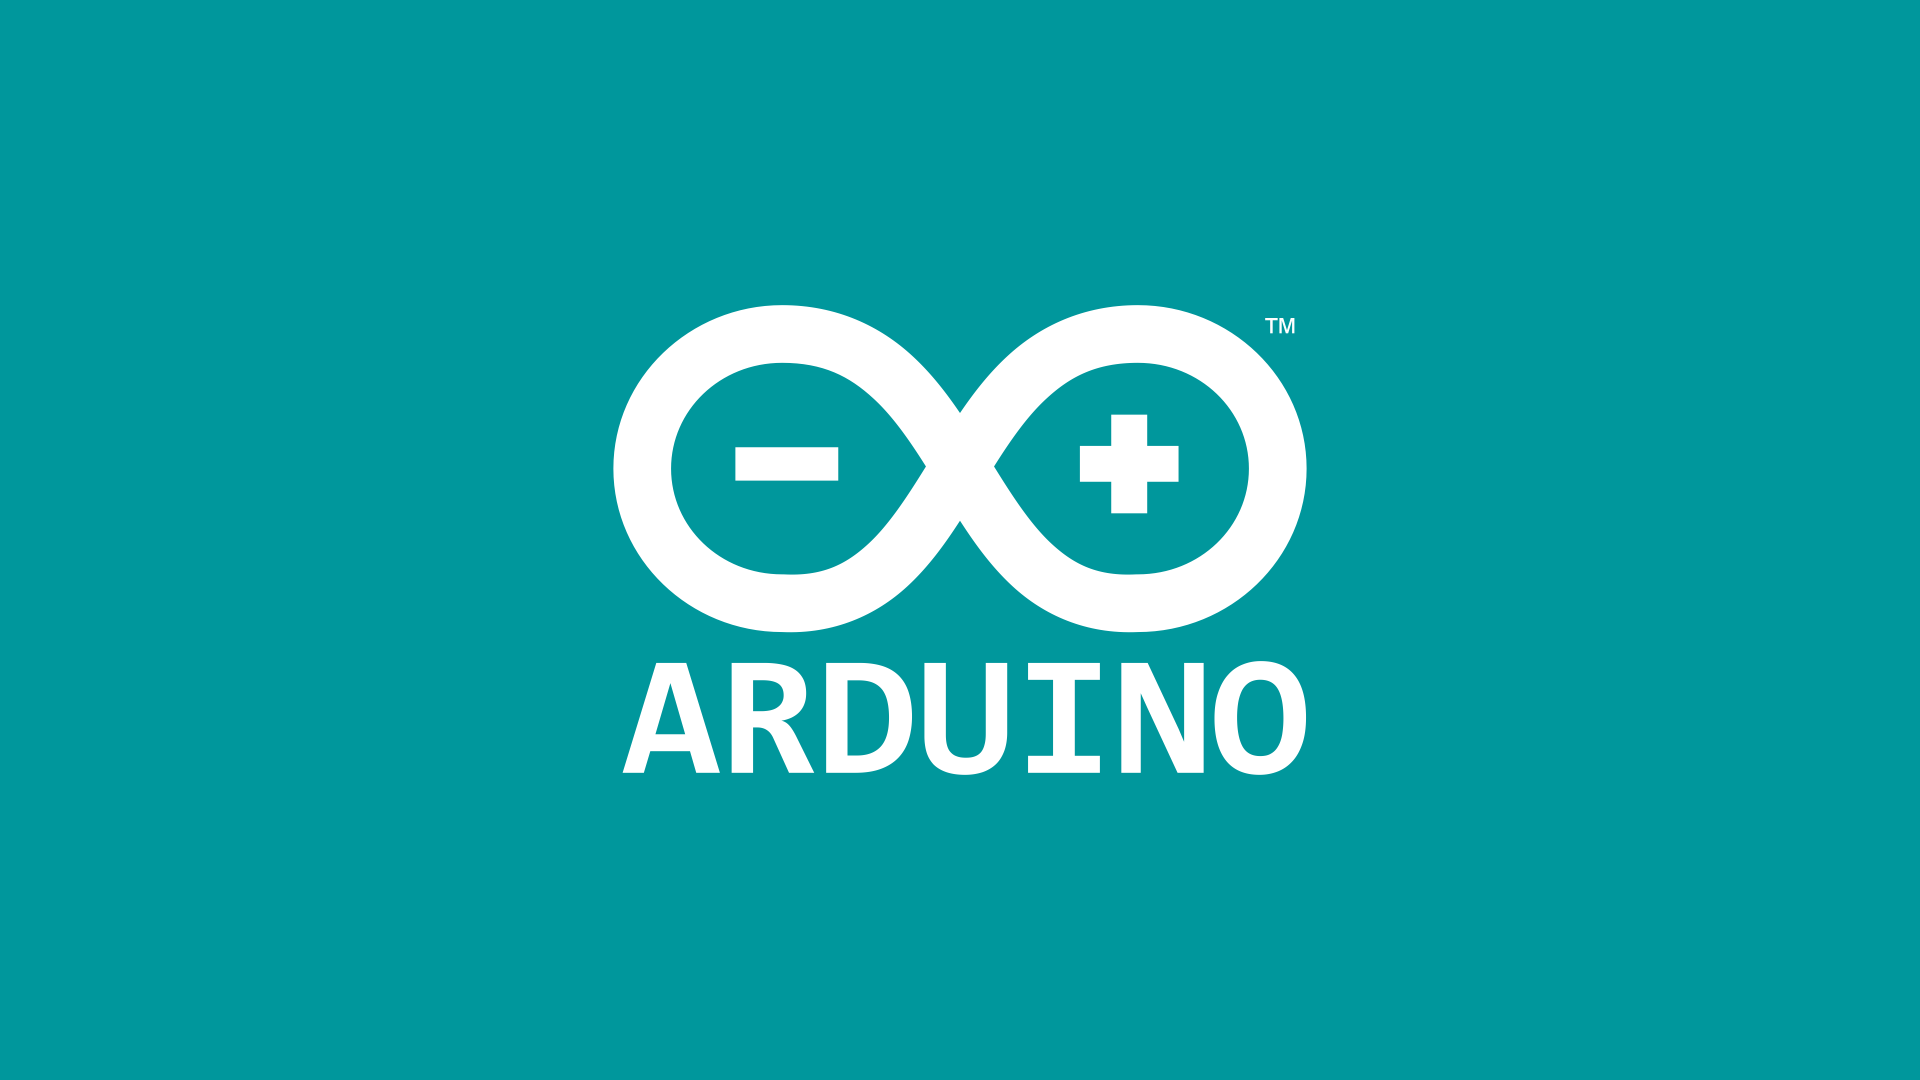 Https arduino cc. Arduino ide. Ардуино эмблема. Ардуино ide логотип. Ардуино иконка.